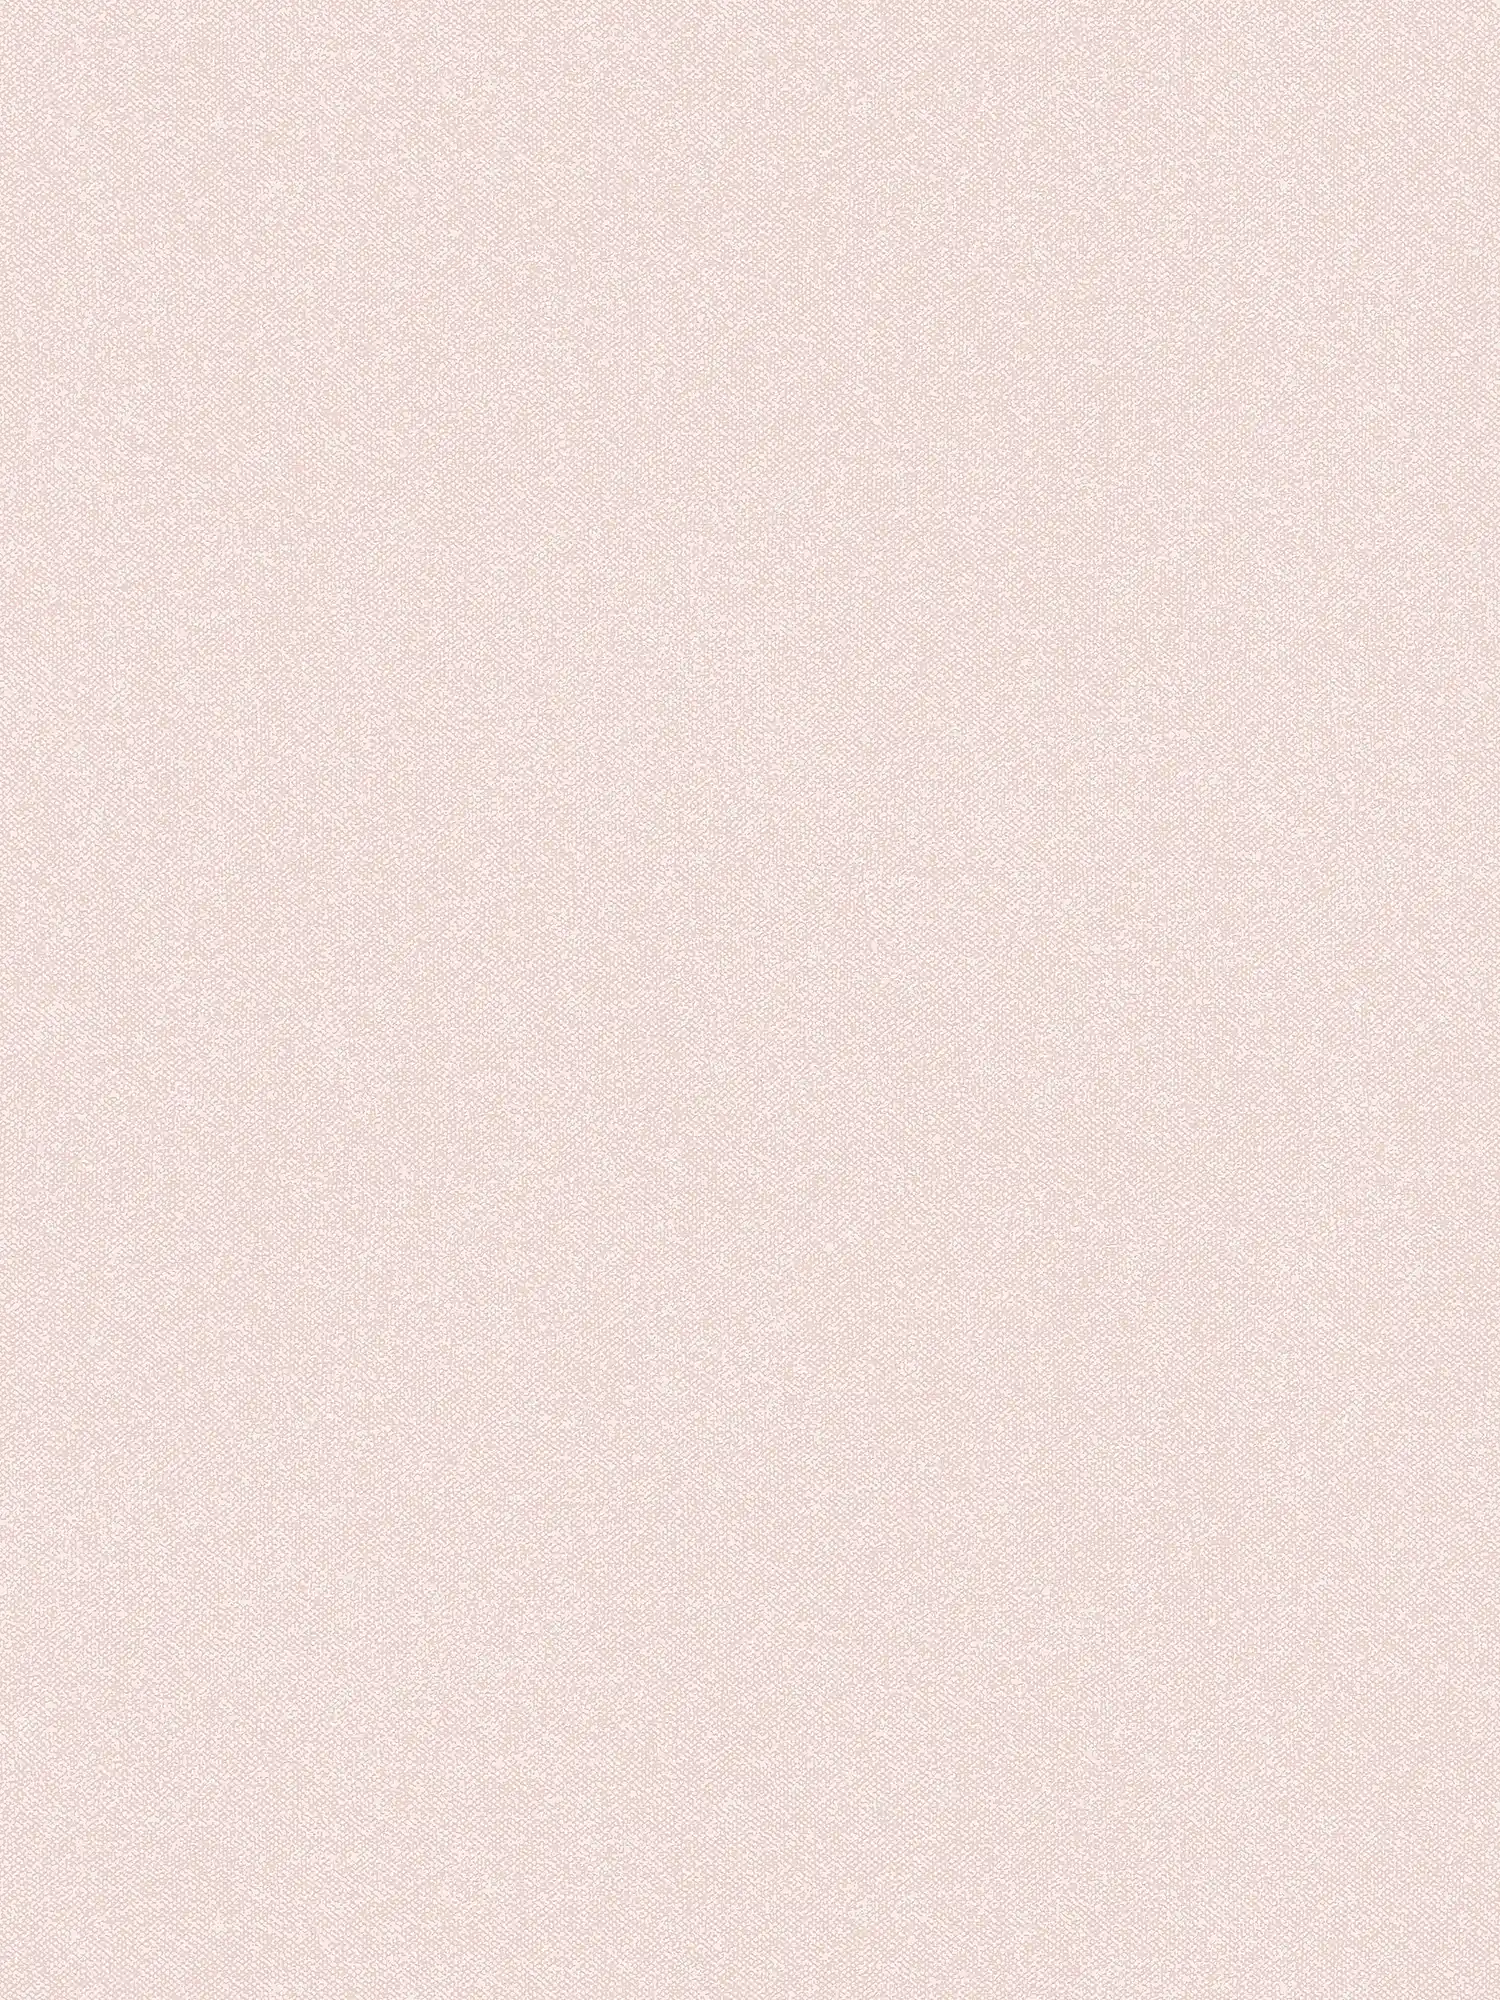 Textil-Optik Tapete einfarbig – Rosa, Creme, Weiß
